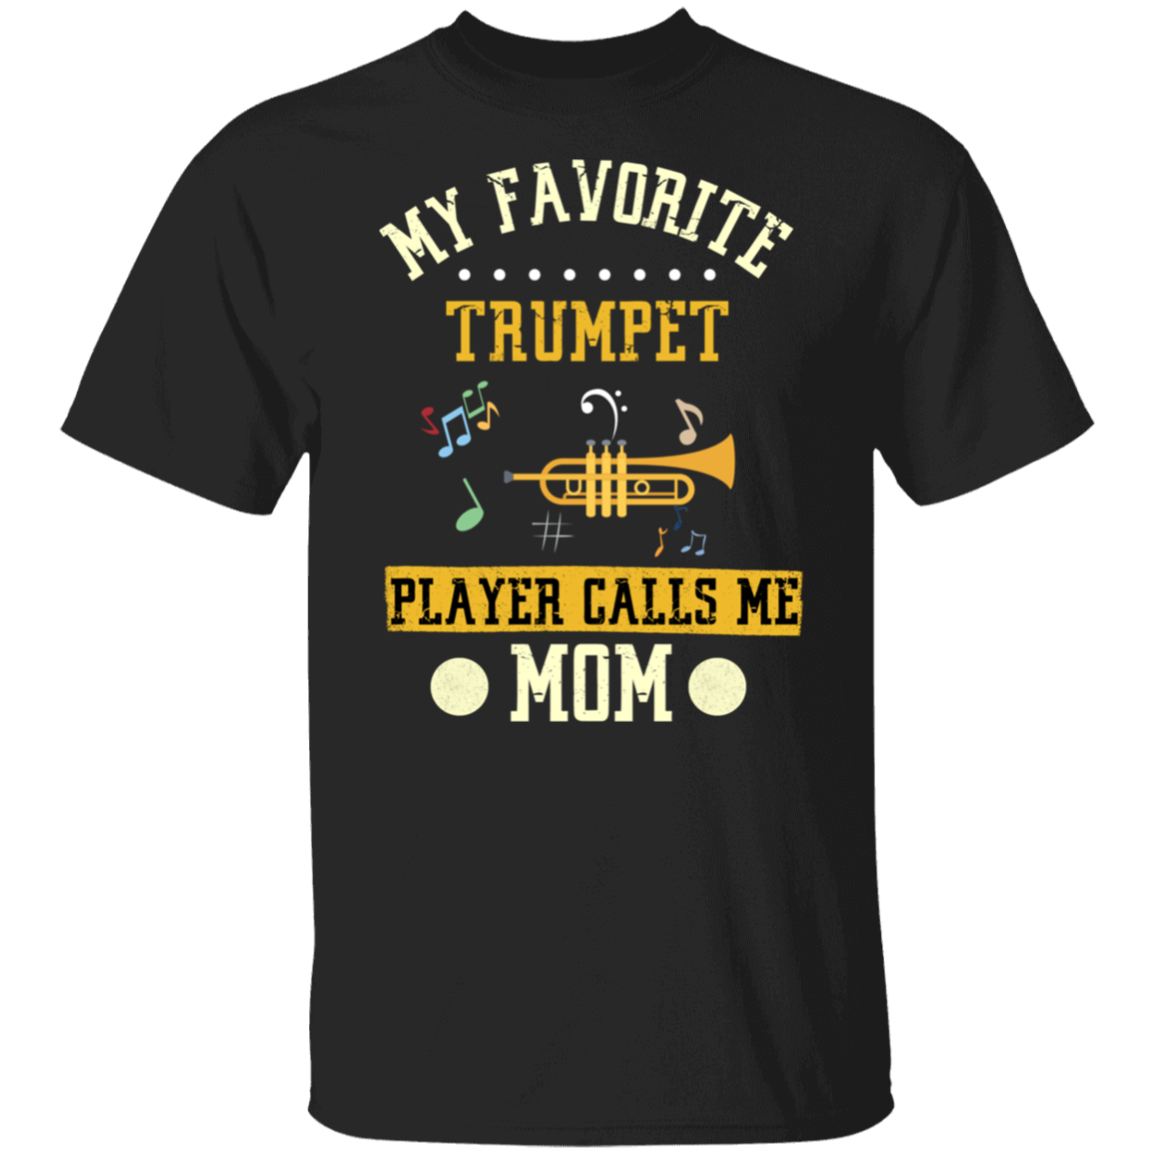 Favorite Trumpet T-Shirt